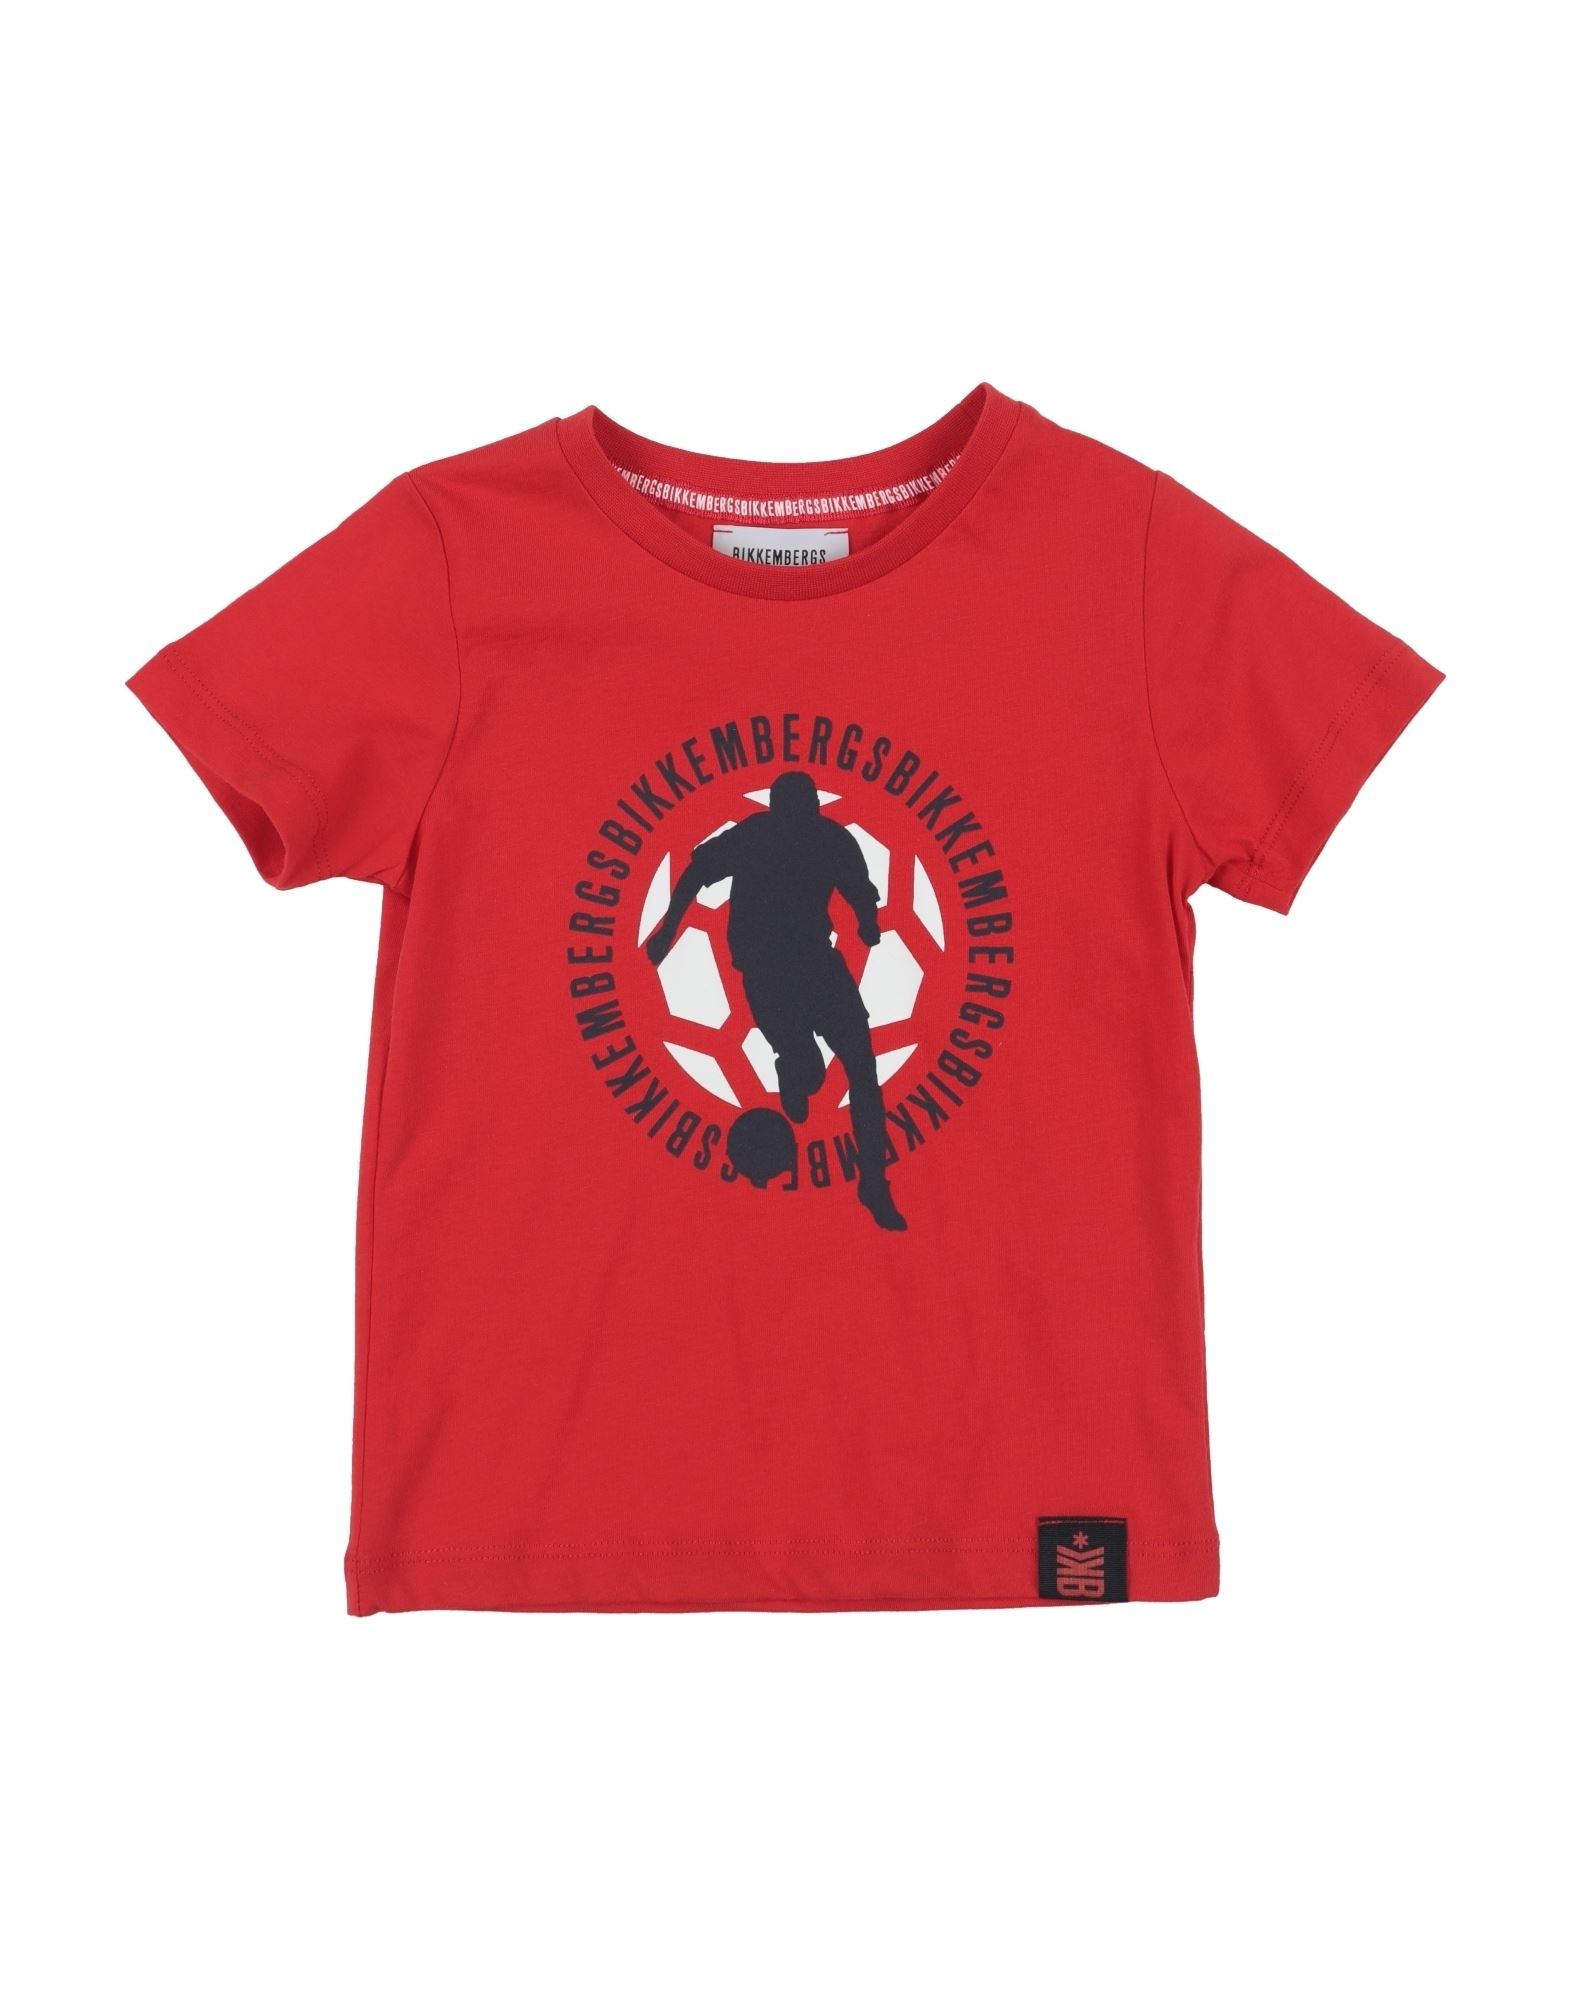 BIKKEMBERGS T-shirts Kinder Rot von BIKKEMBERGS